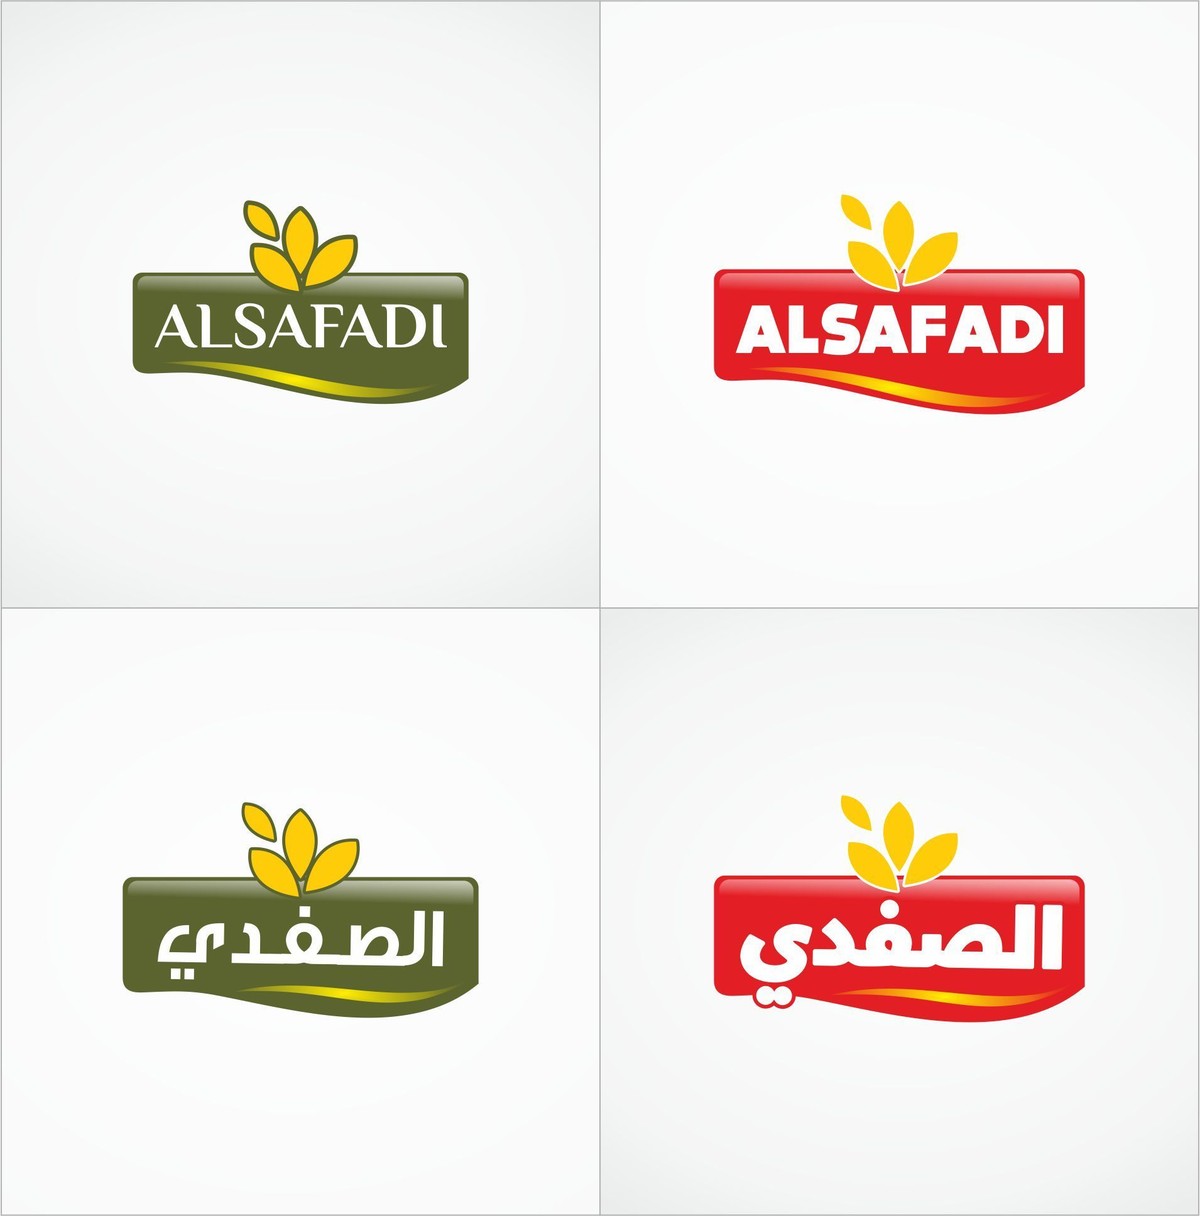 alsafadi logo